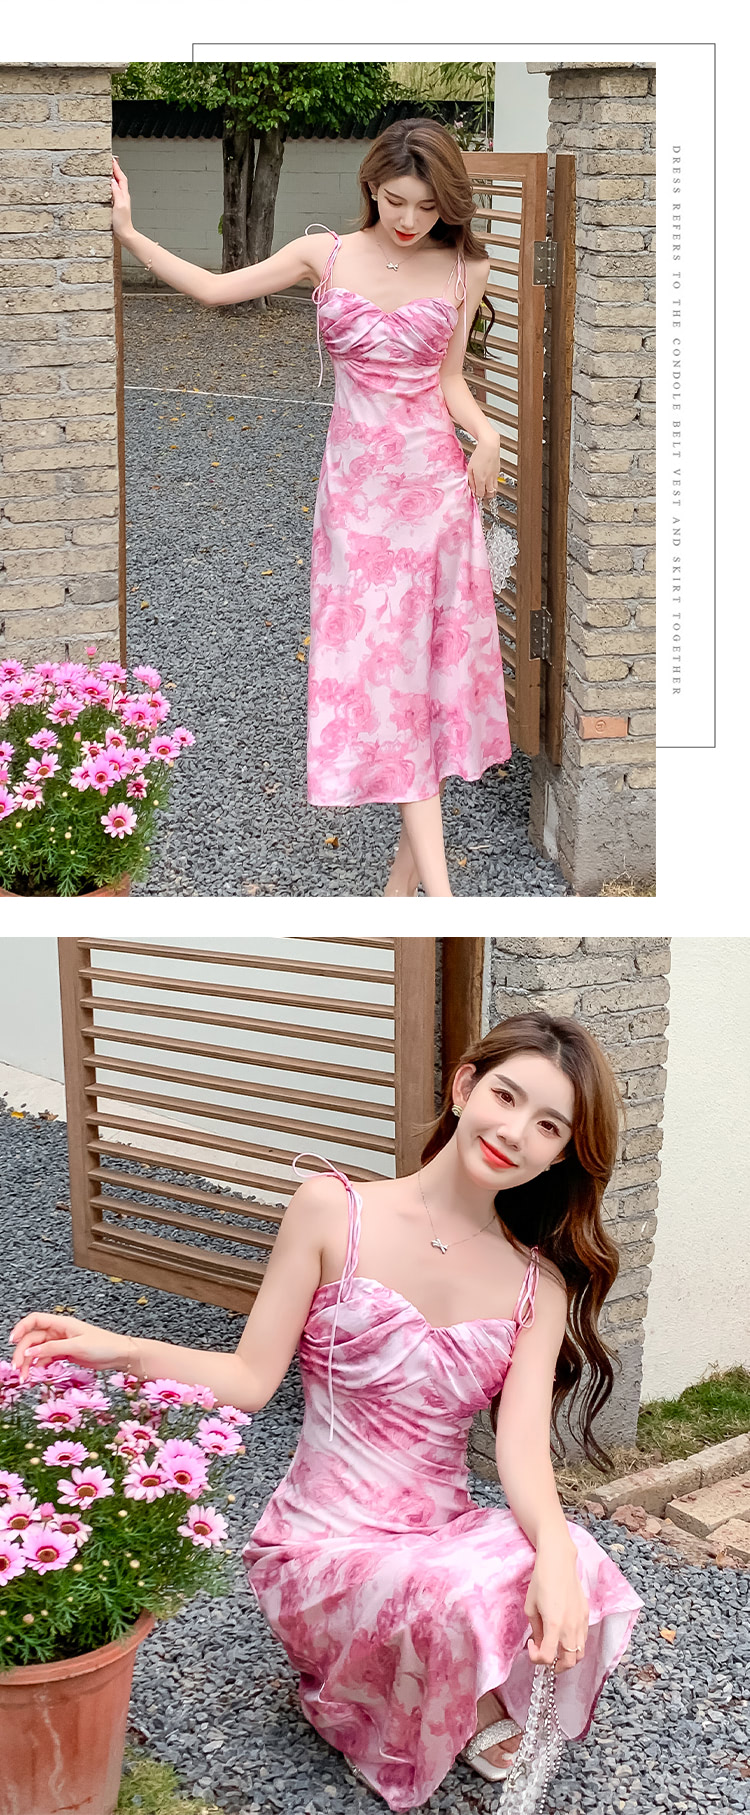 Sweet-Floral-Printed-Satin-Summer-Casual-Slip-Dress-Beach-Wear22